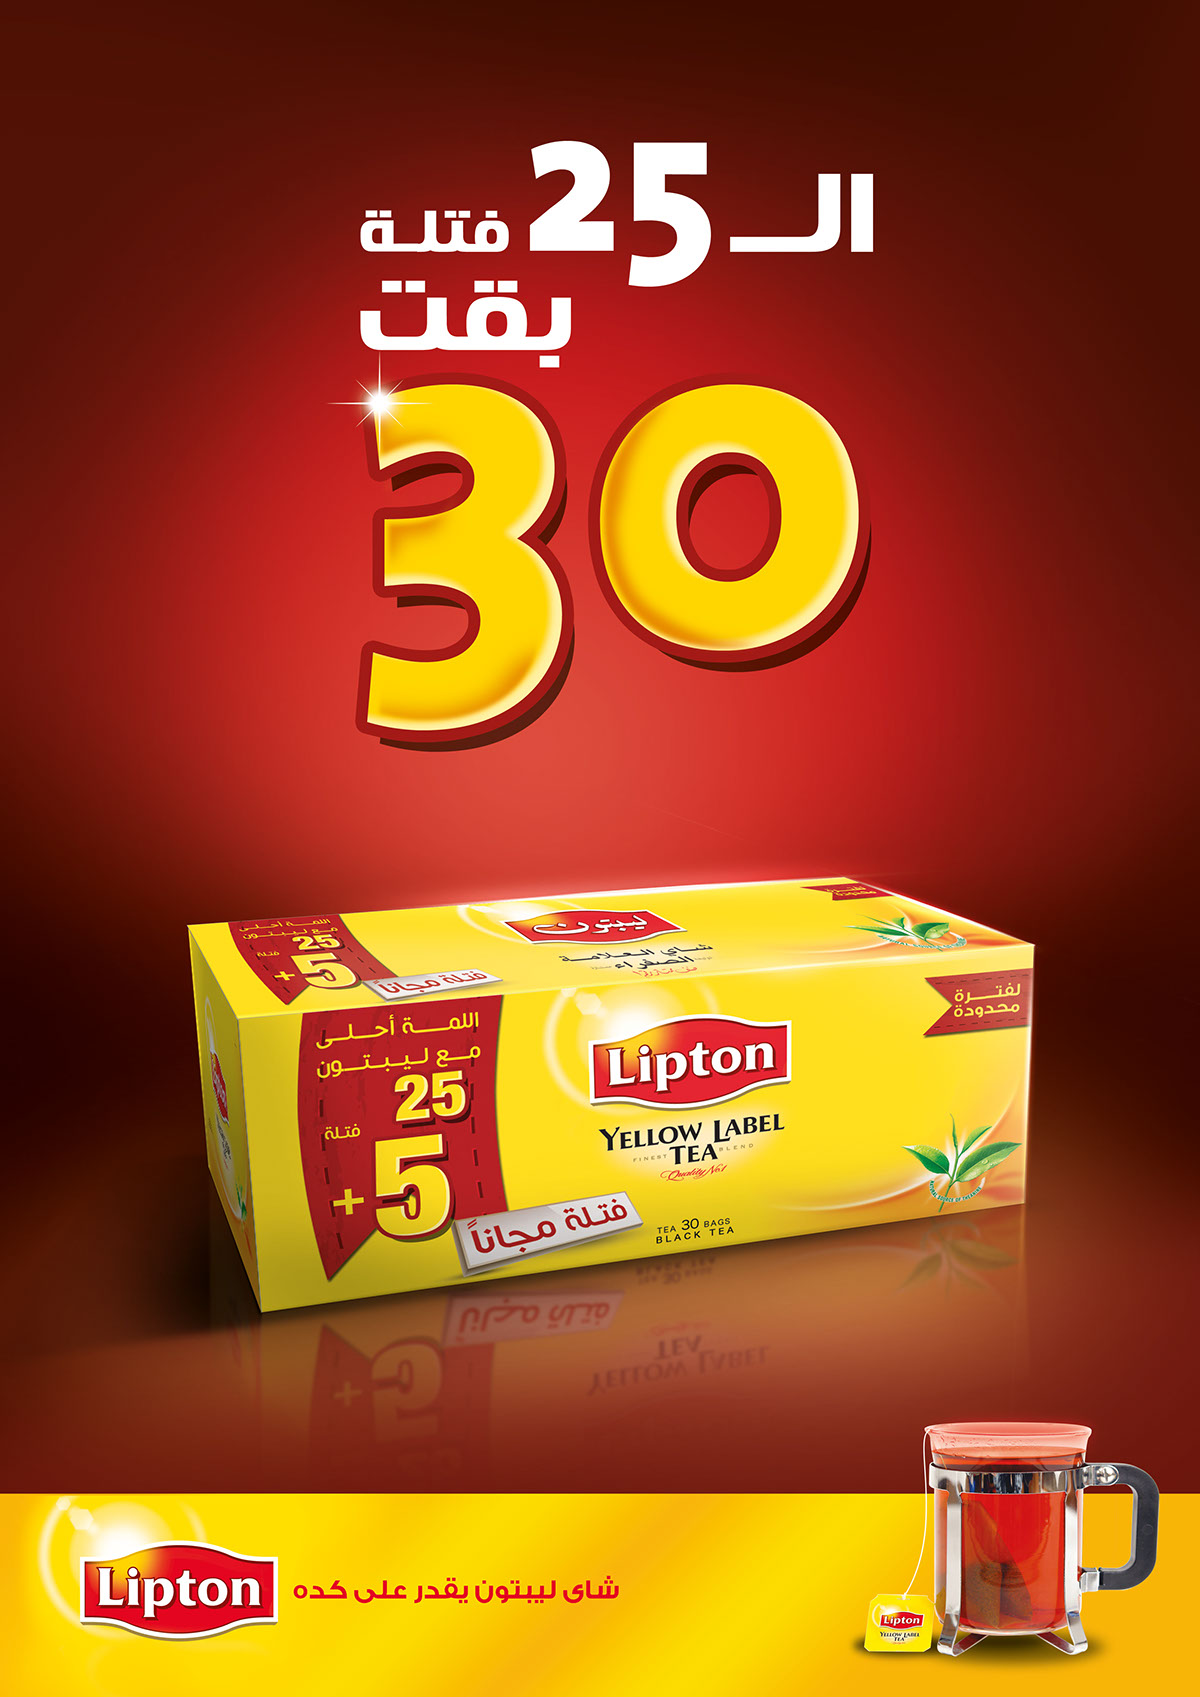 Lipton ramy Unilever tea pos creative concept retouch egypt Sudan green tea drink milk poster packaging design ramy mohamed